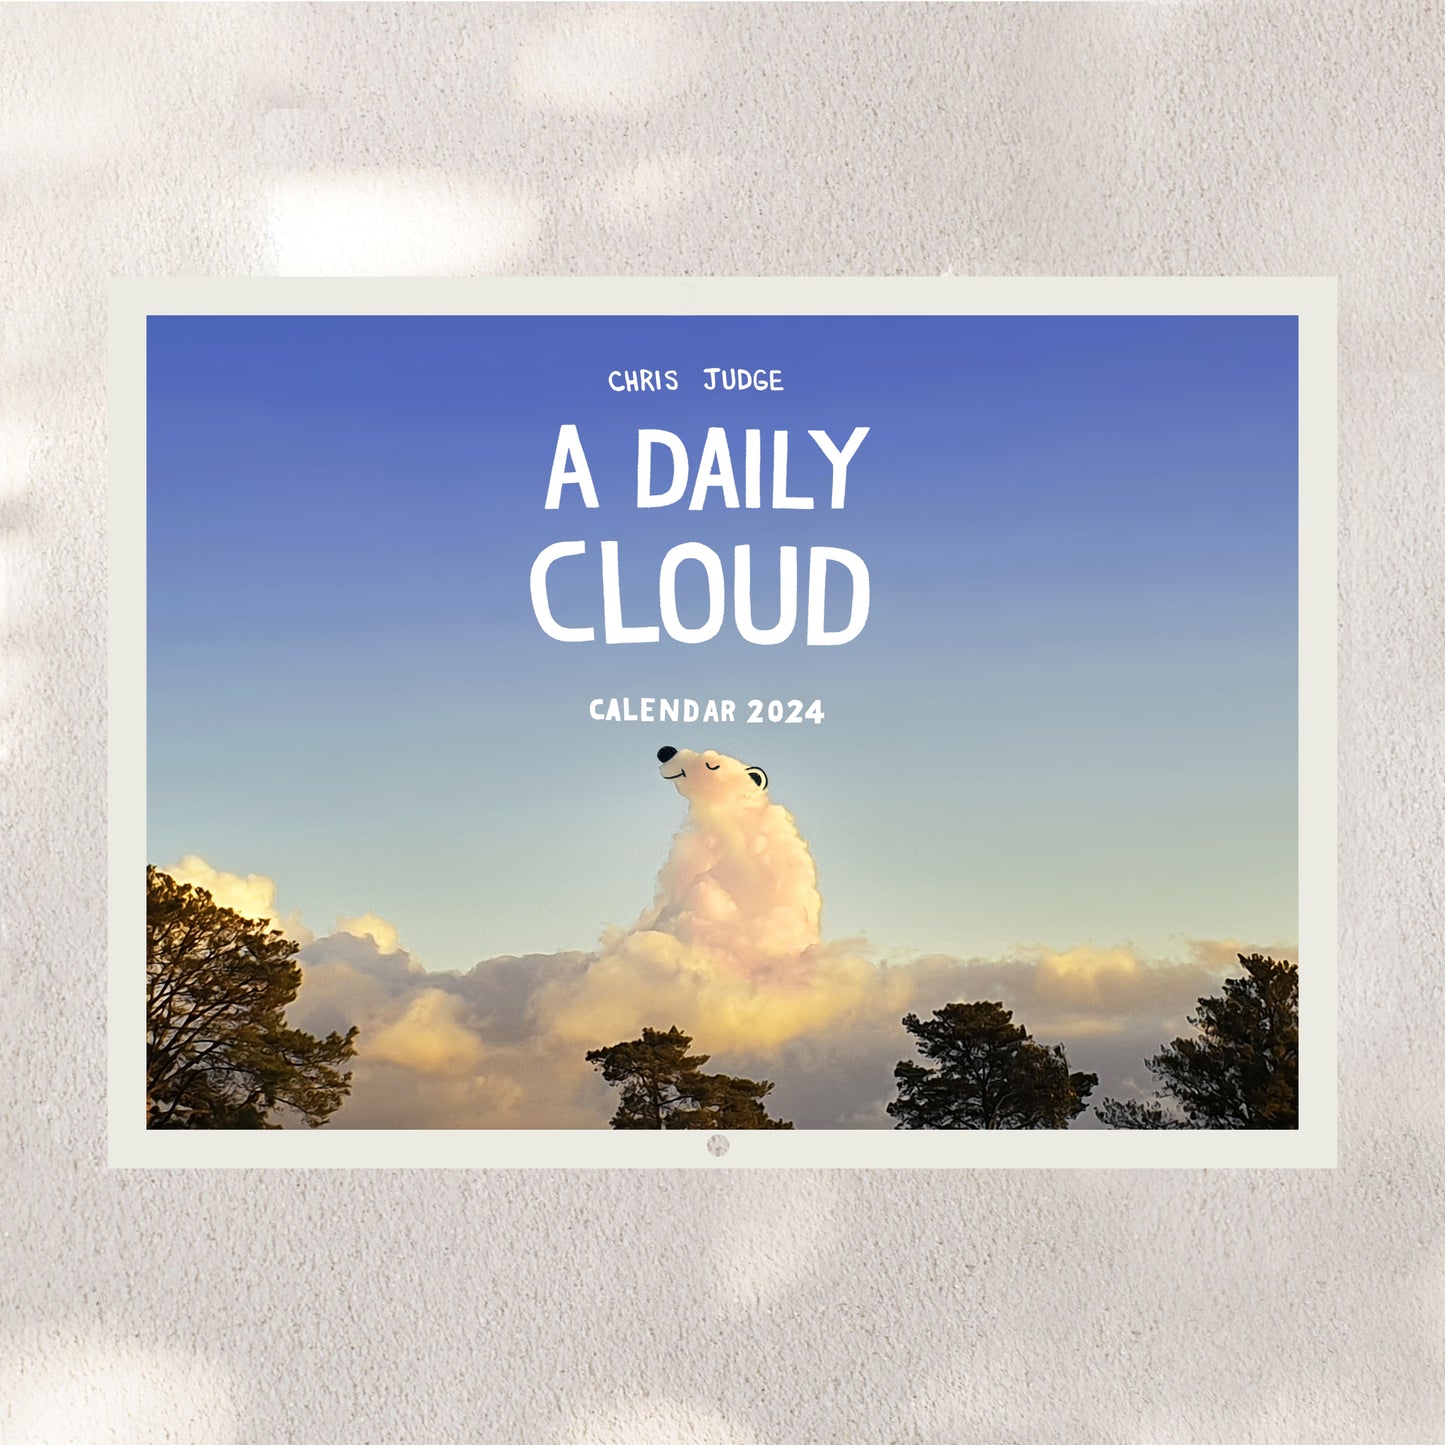 NEW A Daily Cloud Calendar 2024!